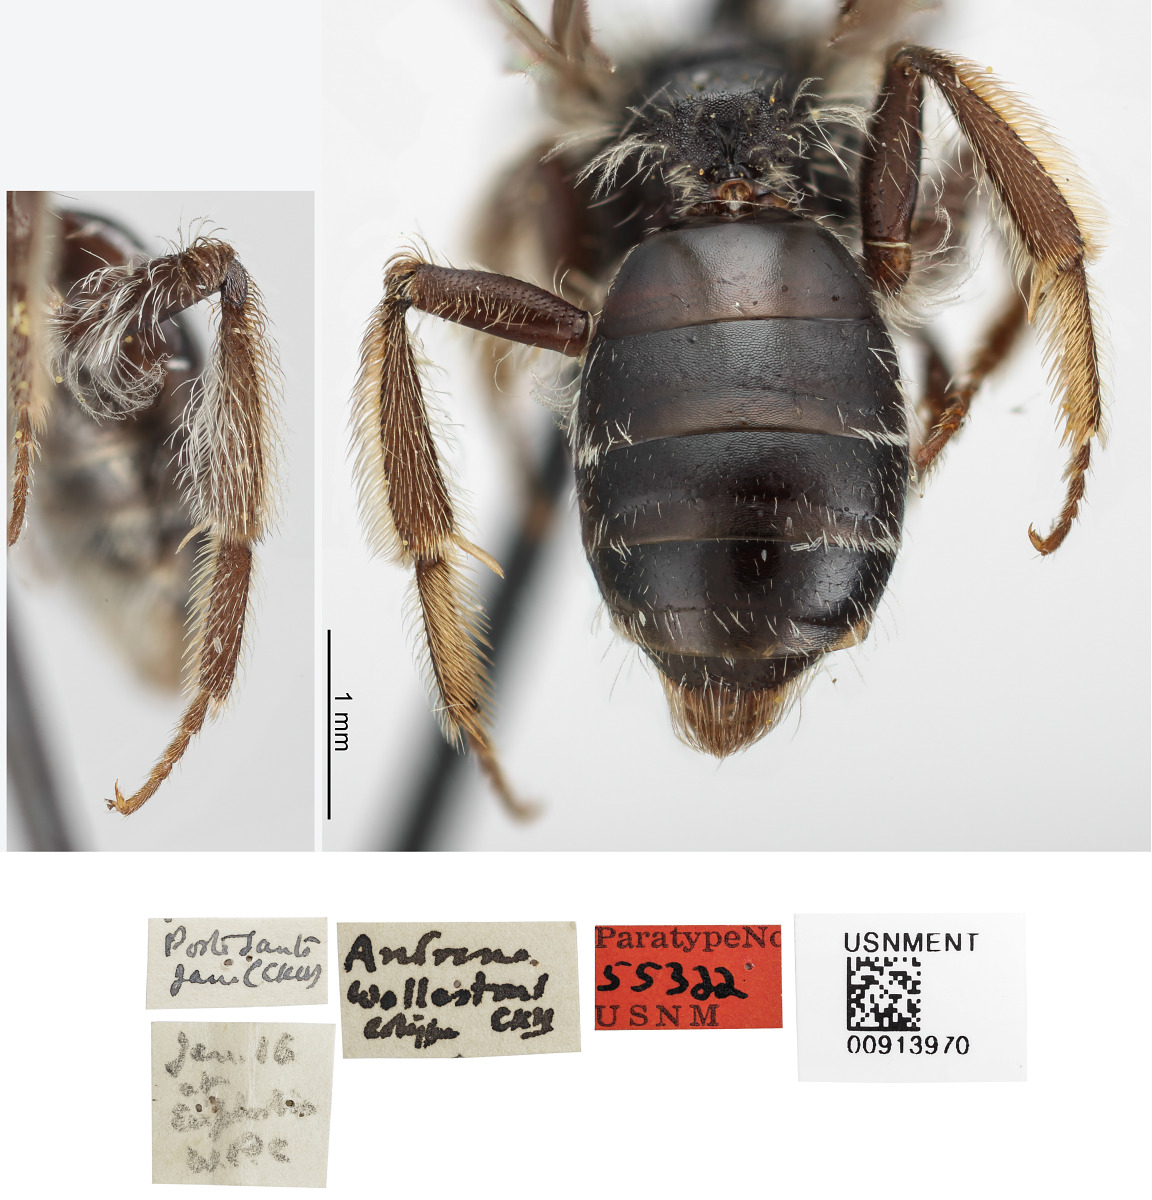 Andrena wollastoni image